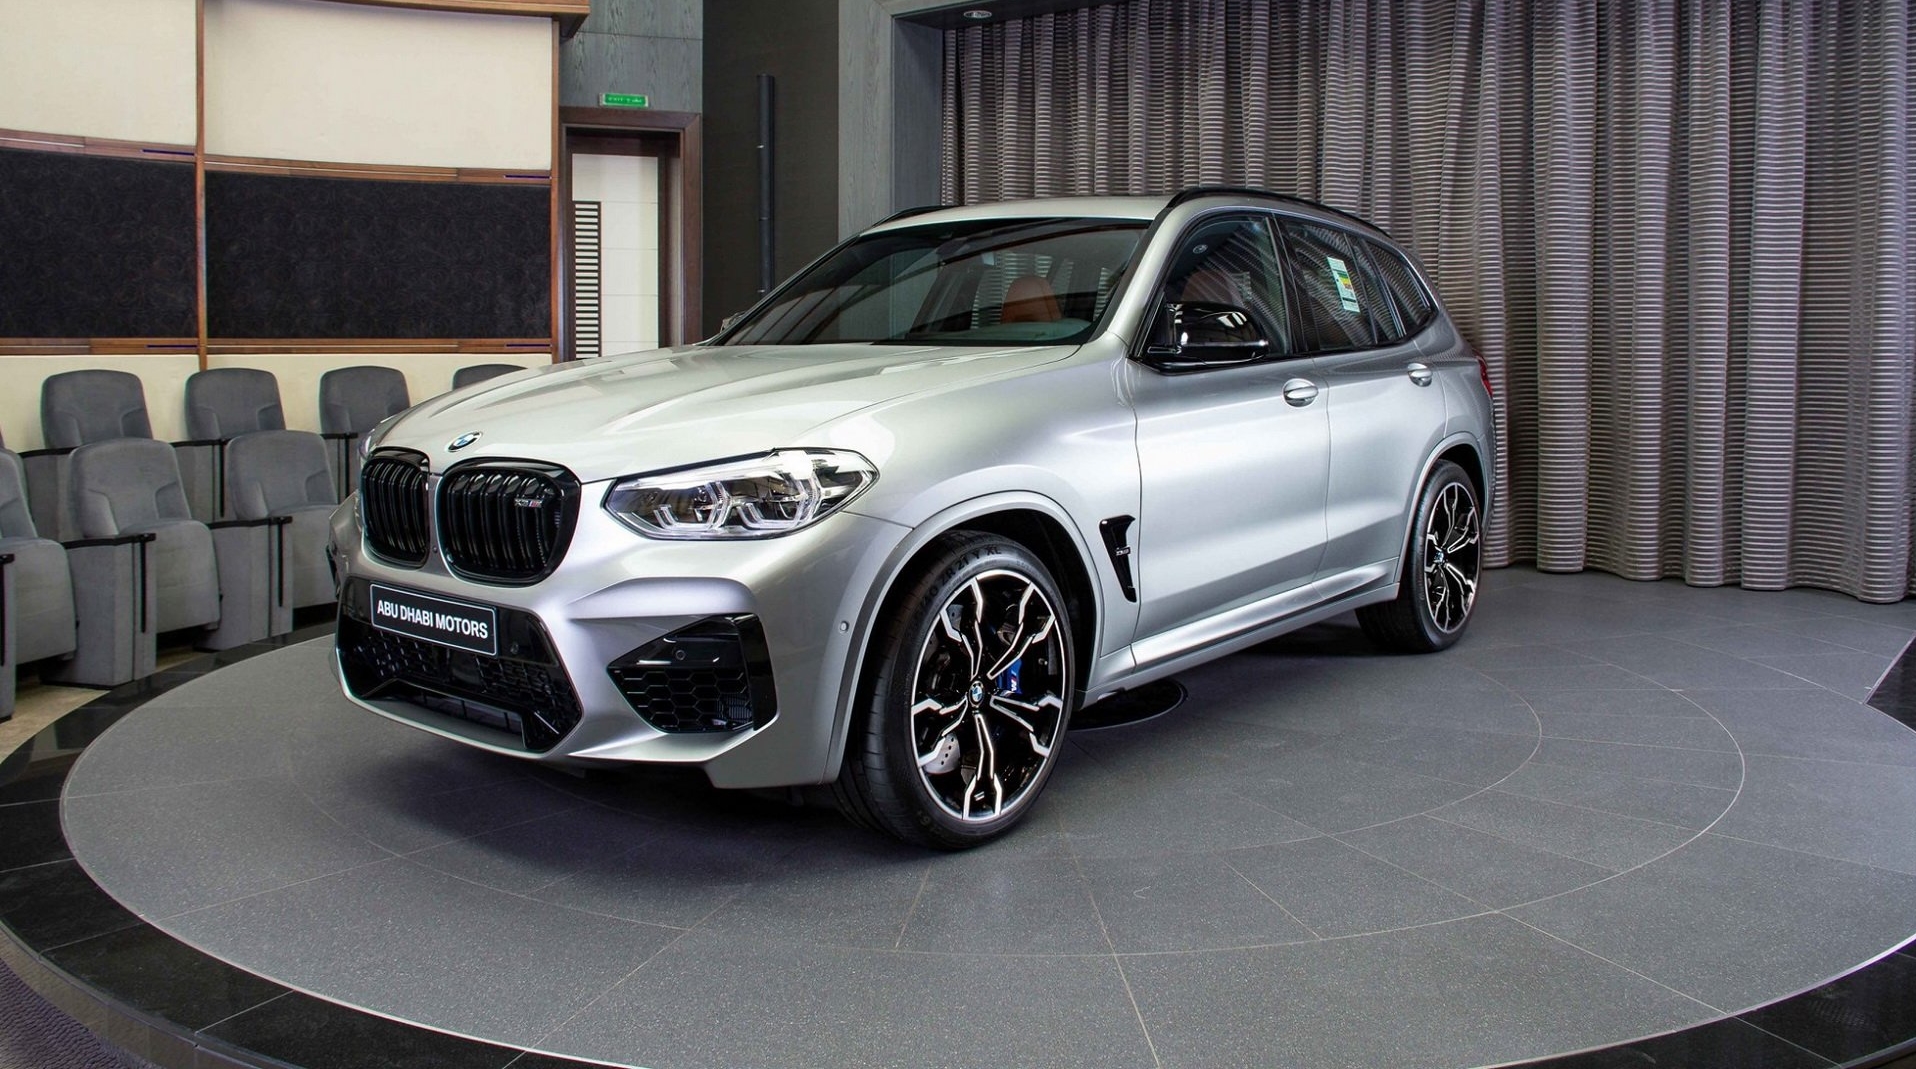 Ta BMW X3 M Competition s Tartufo barvo notranjosti je naravnost…